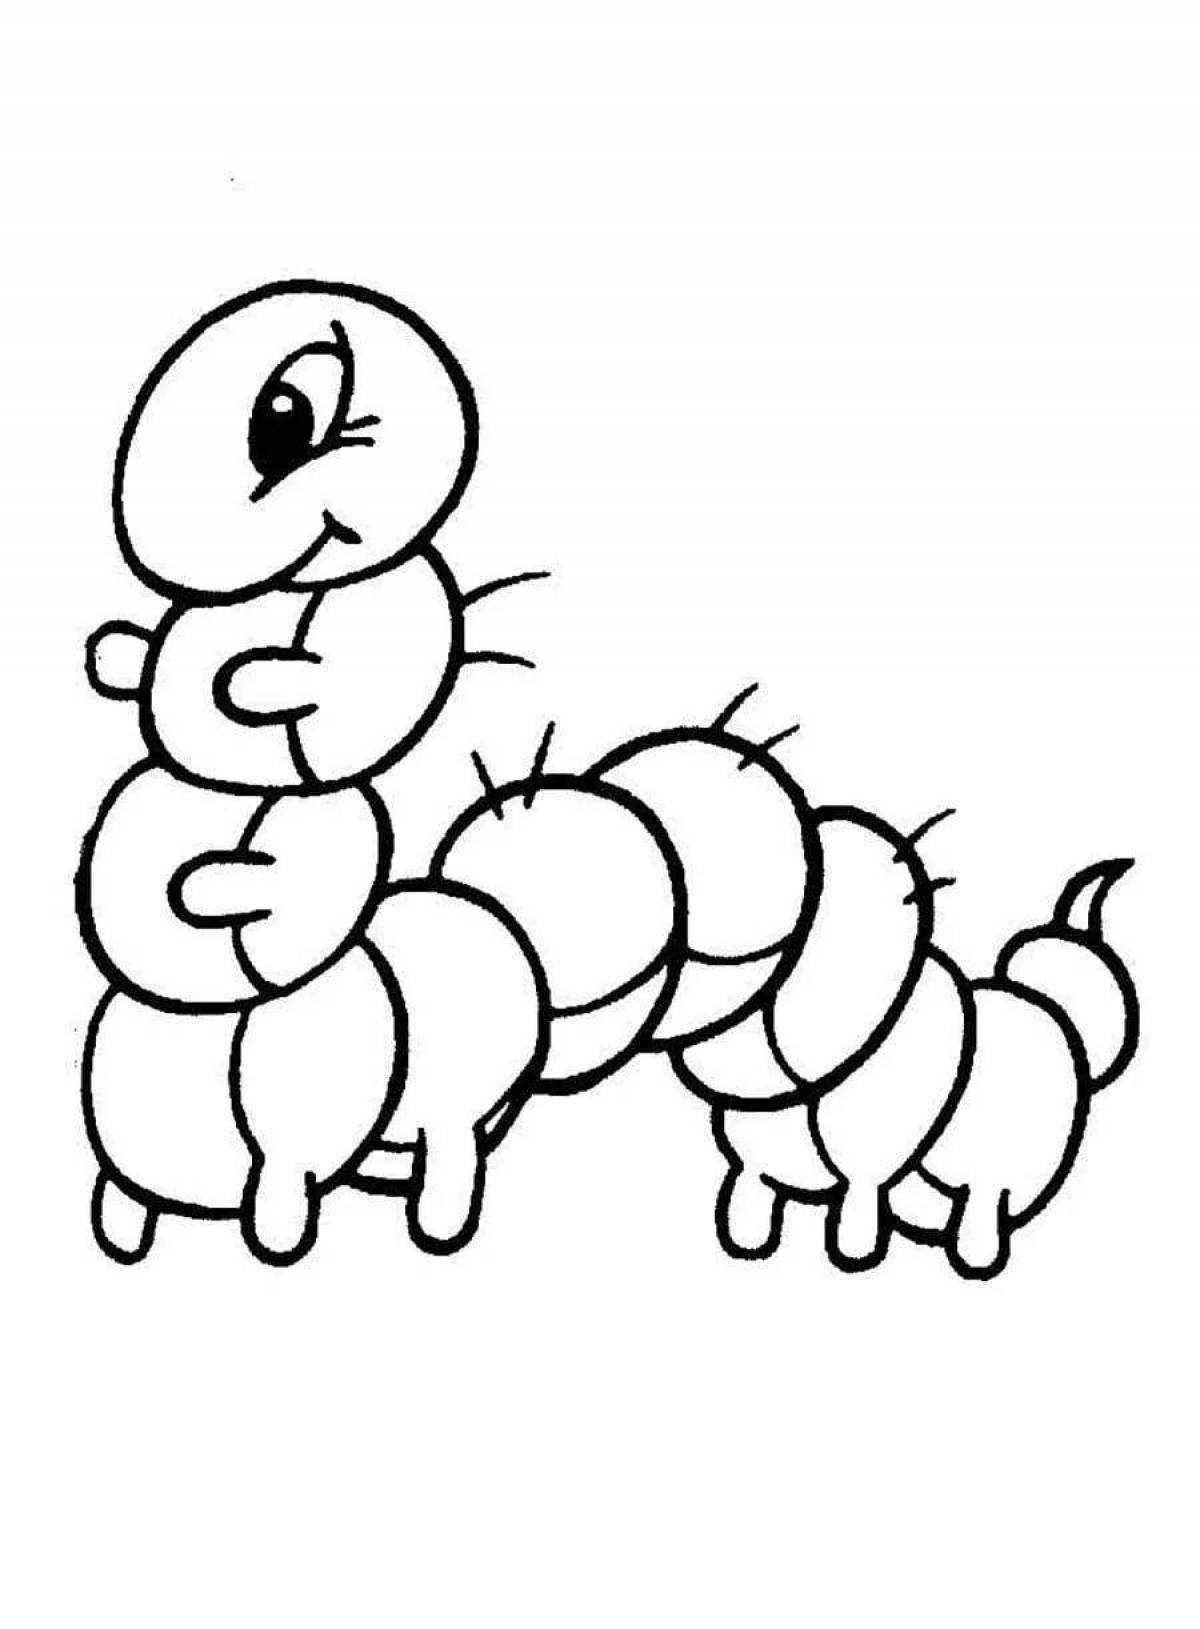 Living centipede coloring book for kids